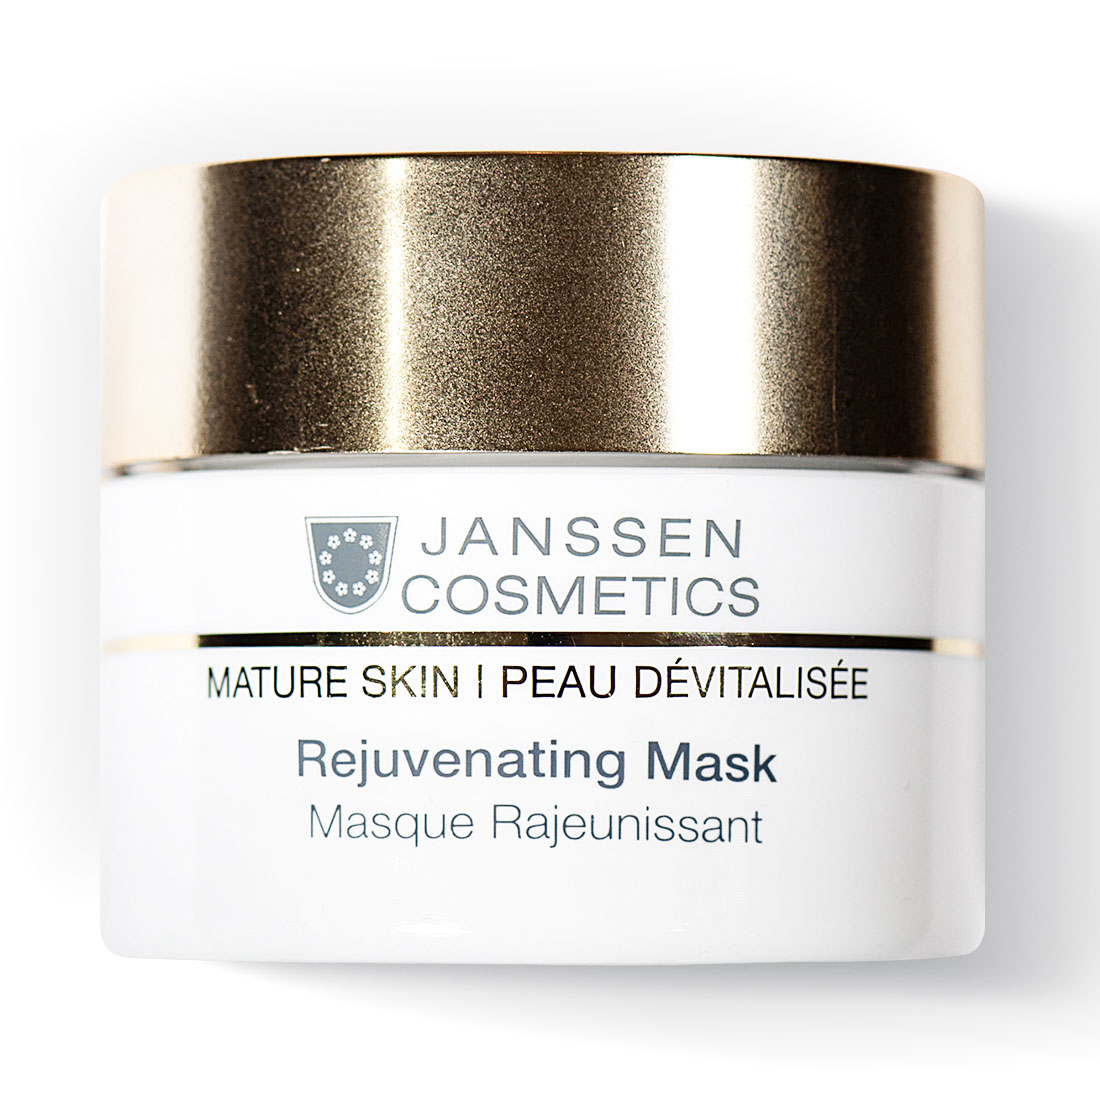 Janssen Cosmetics Омолаживающая крем-маска Rejuvenating Mask, 50 мл (Janssen Cosmetics, Mature Skin) омолаживающая крем маска rejuvenating mask 50 мл